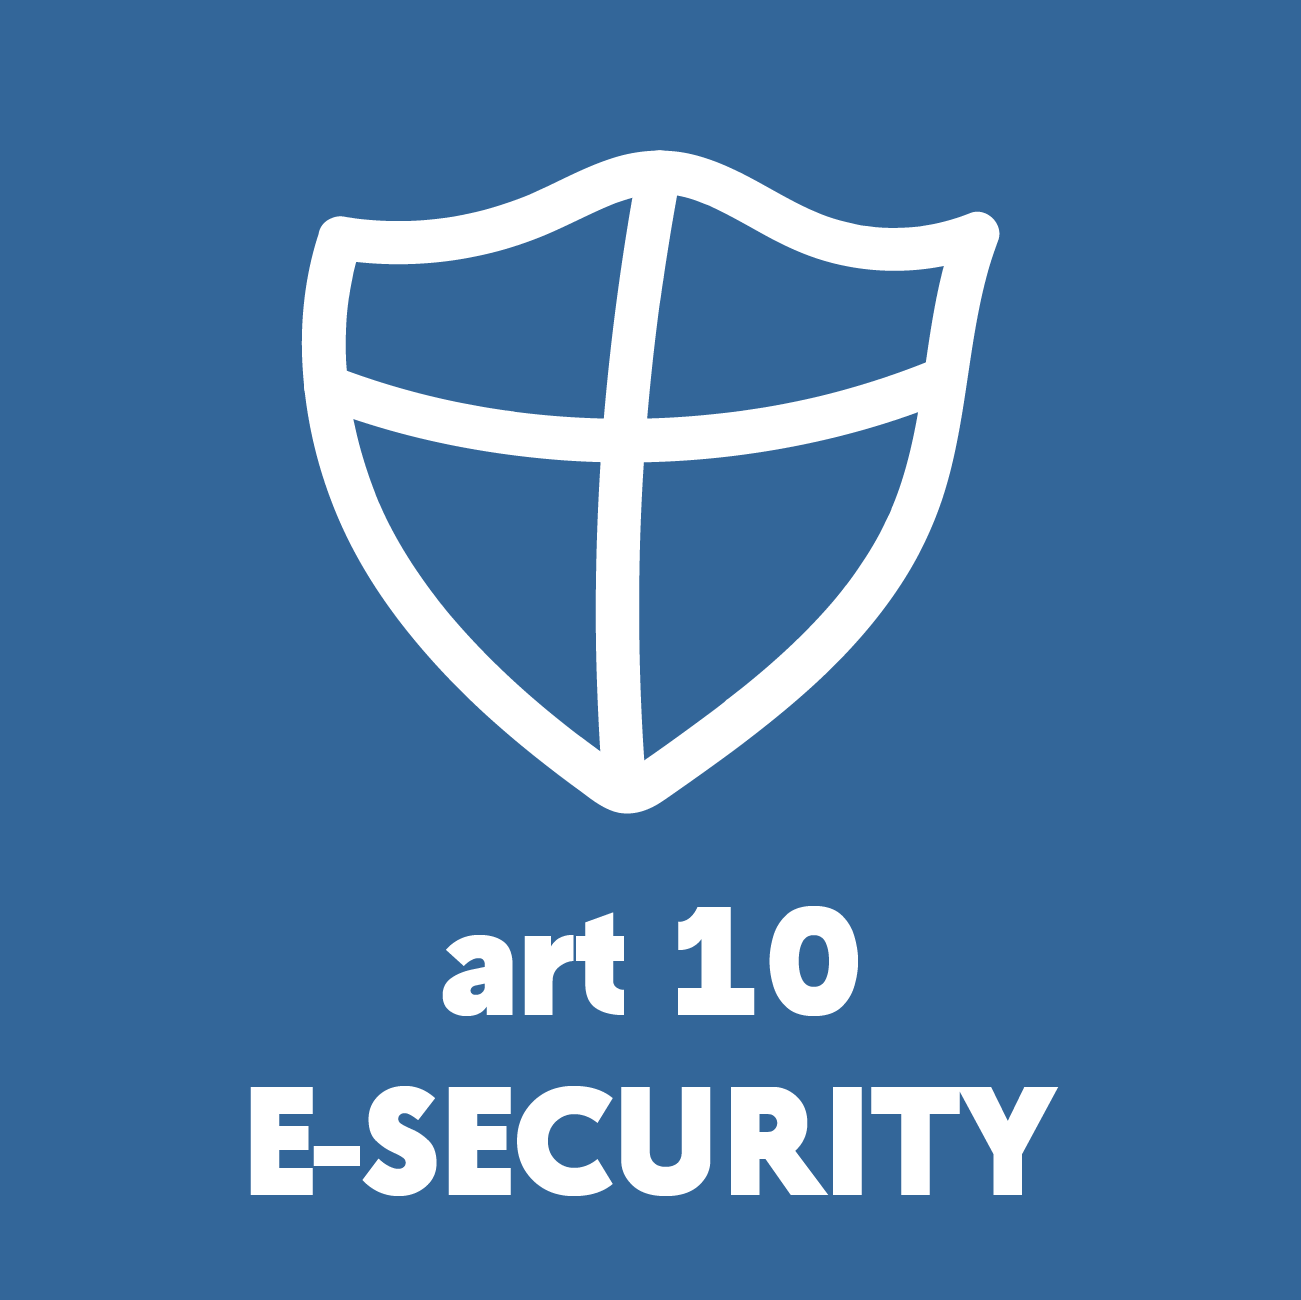 Art 10 e-security